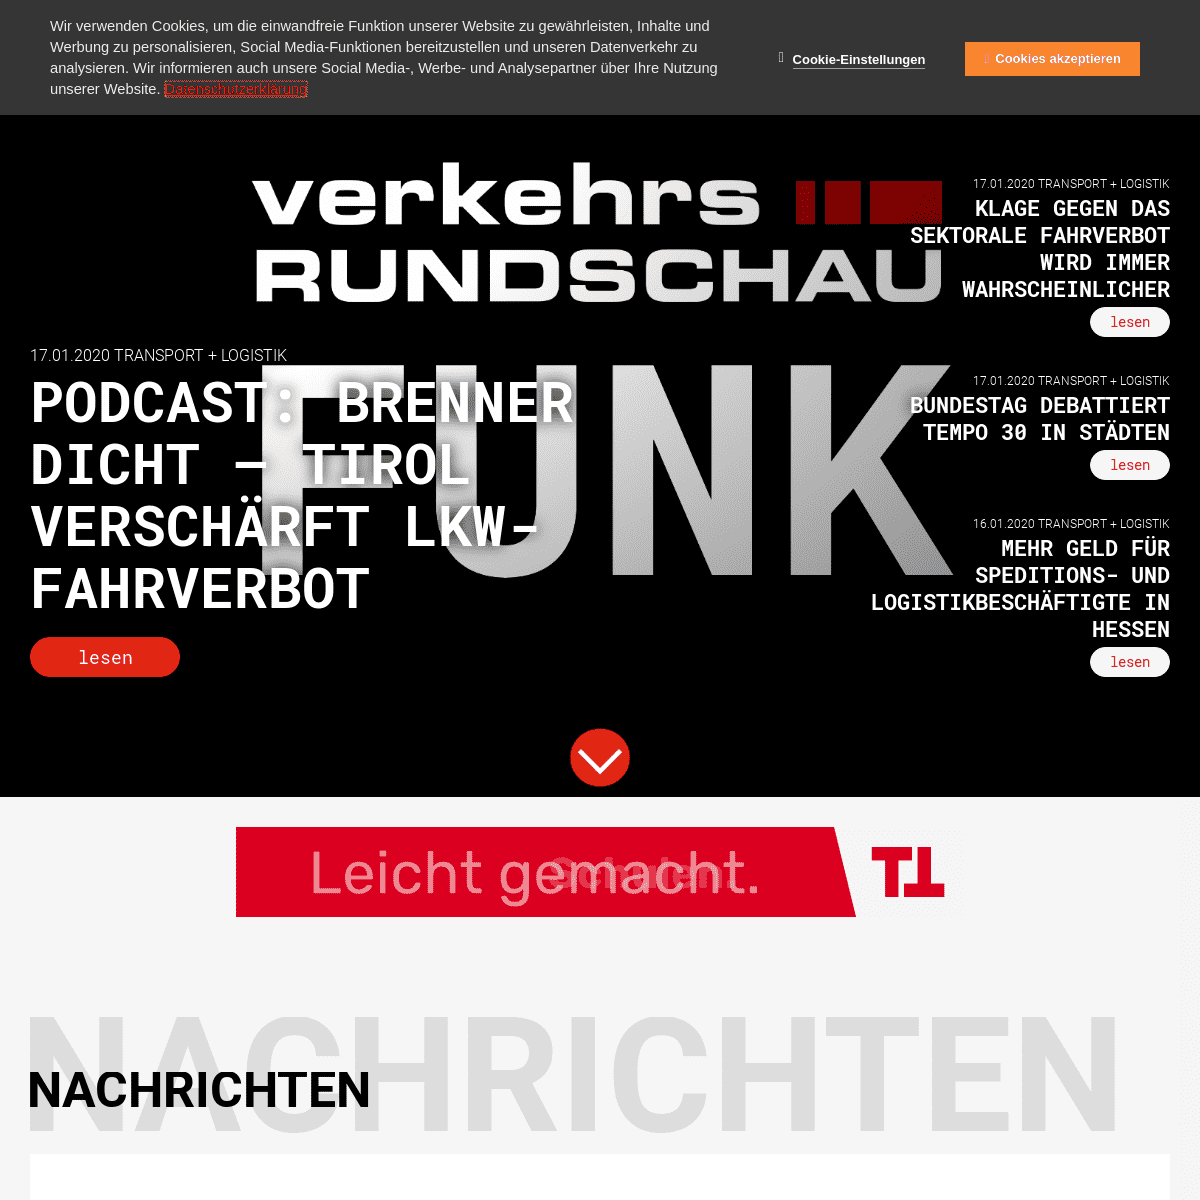 A complete backup of verkehrsrundschau.de